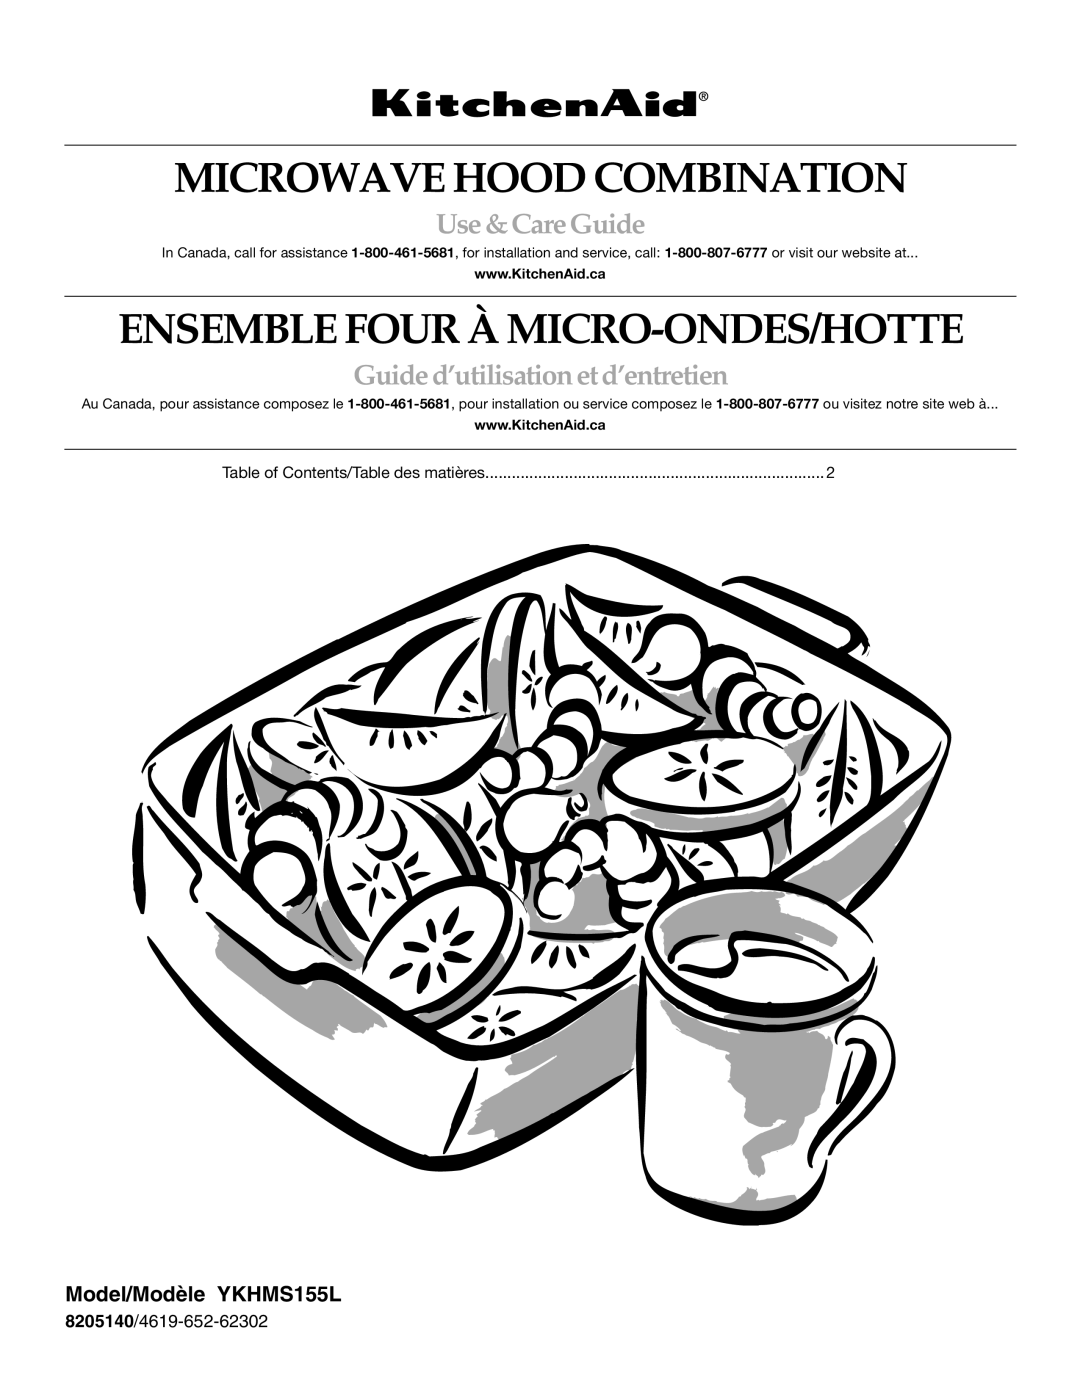 KitchenAid YKHMS155L manual Microwave Hood Combination, Table of Contents/Table des matières 